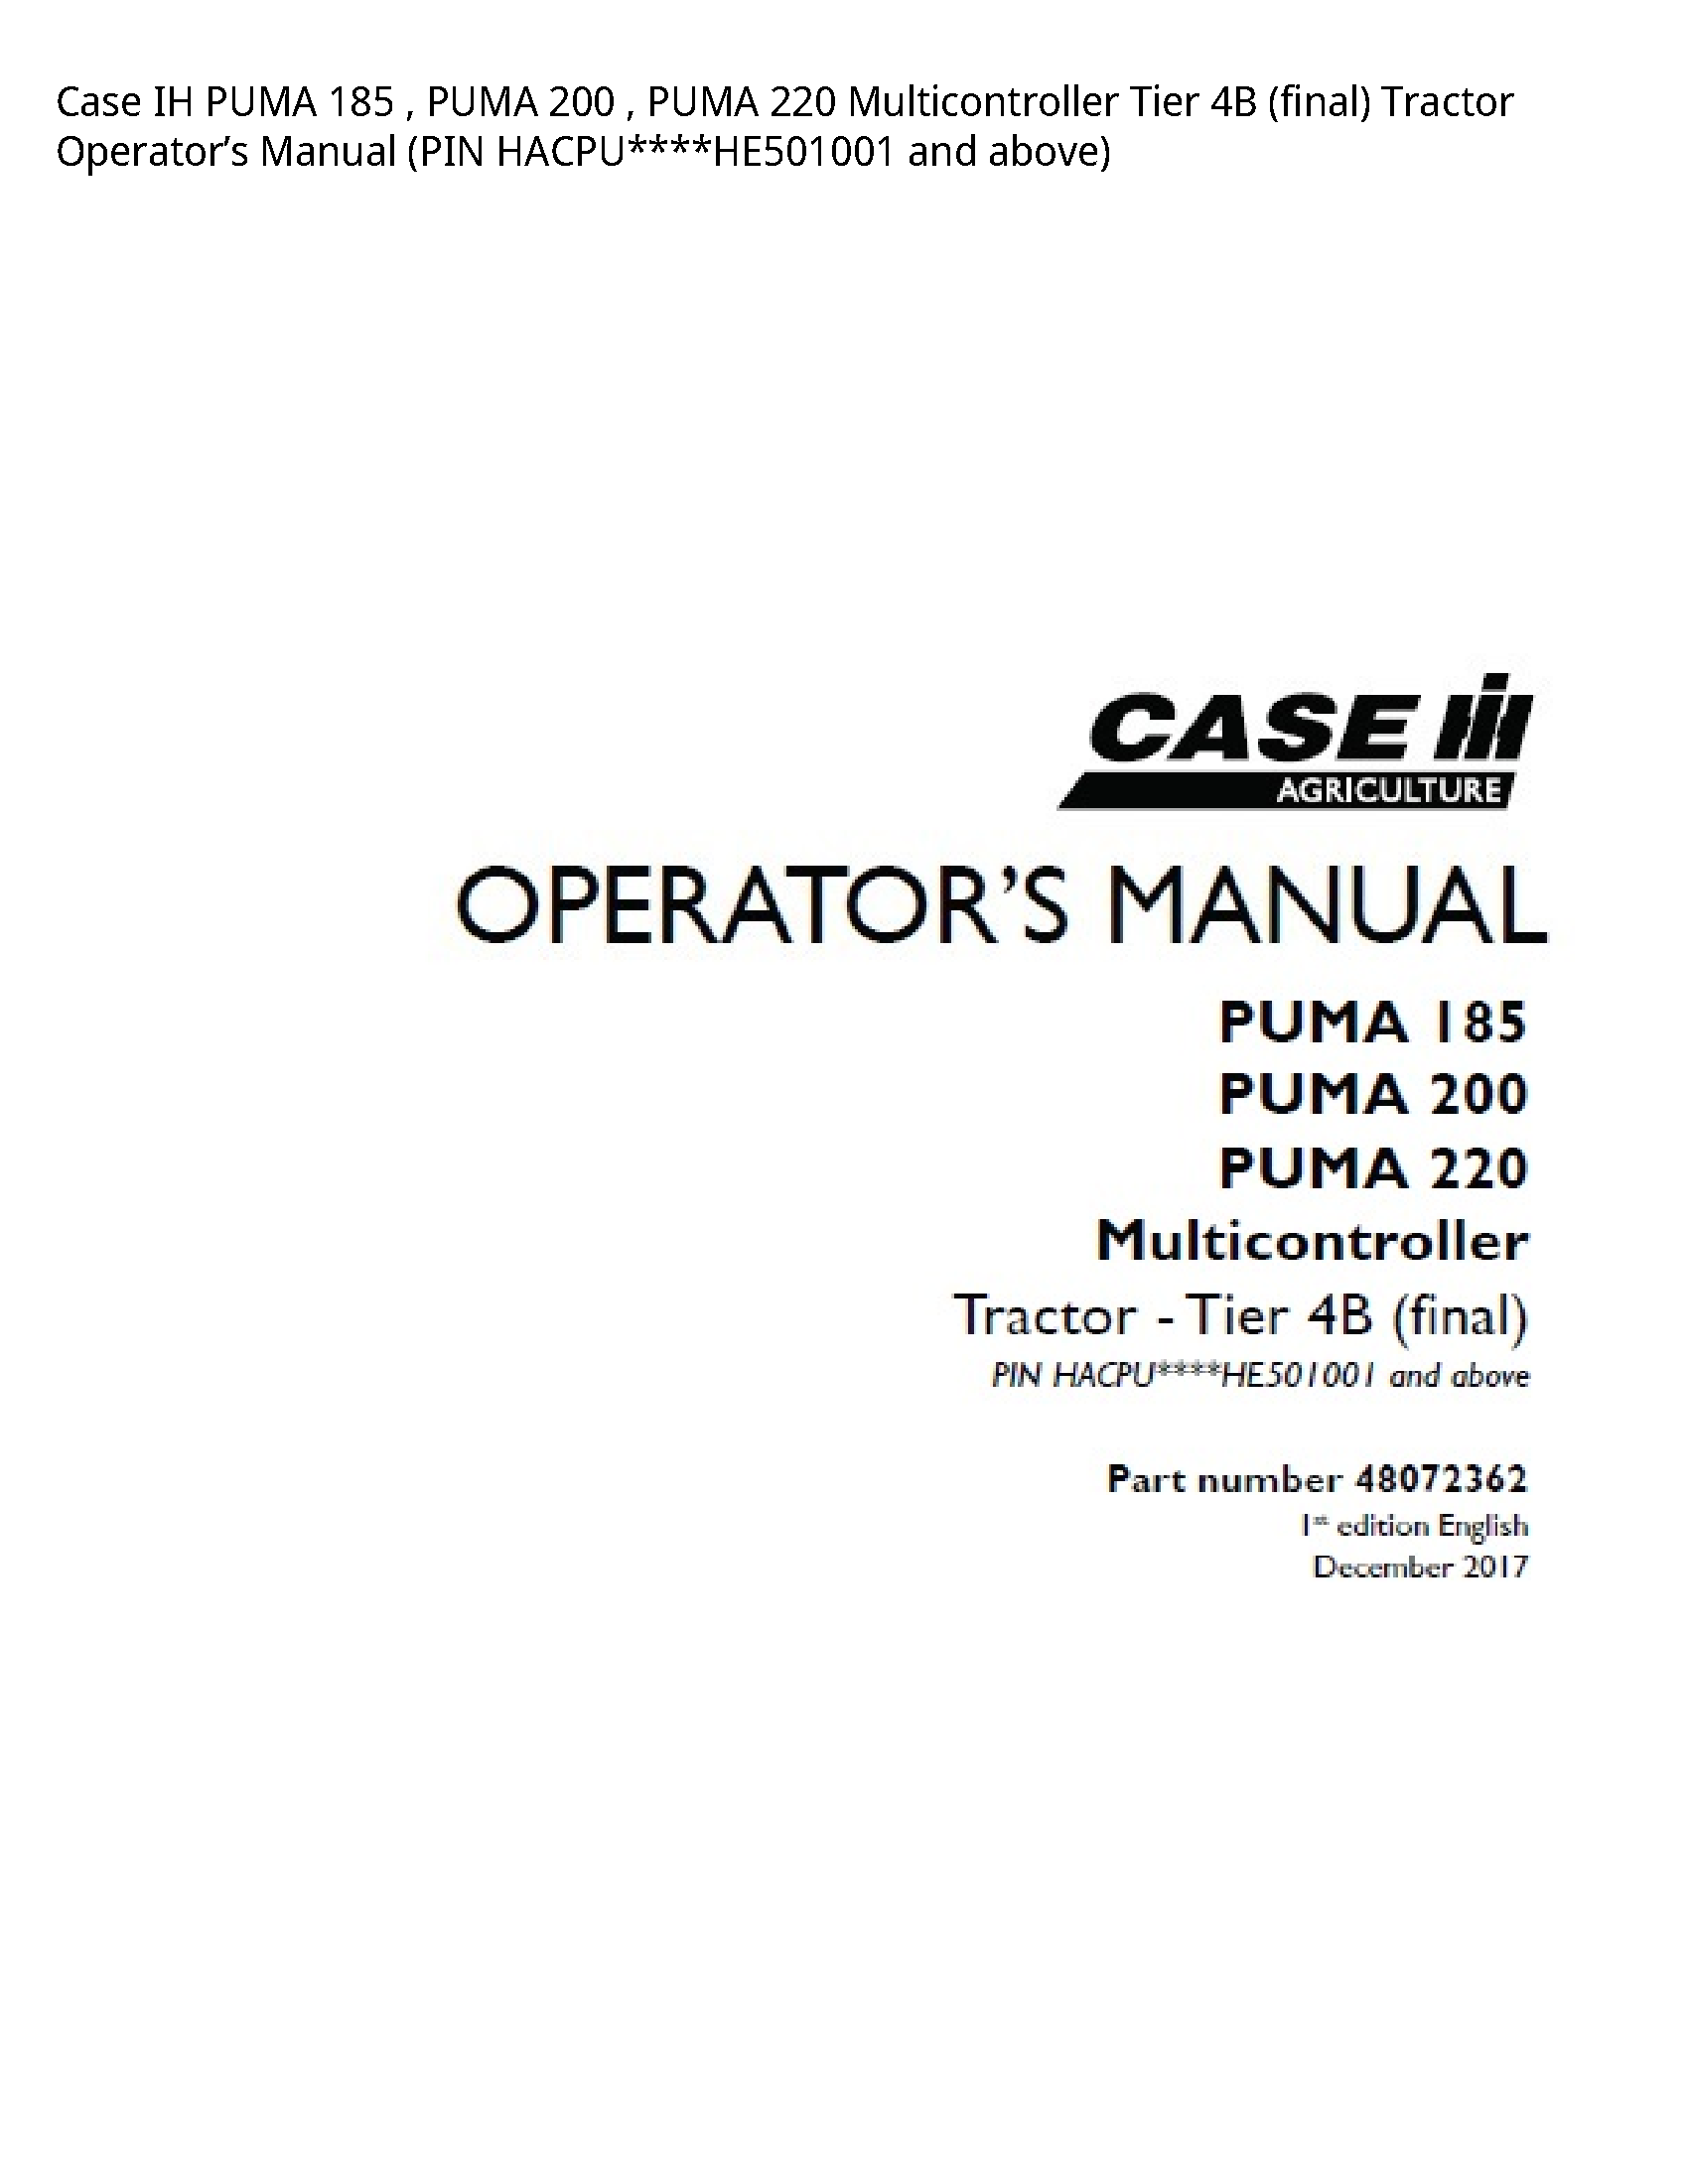 Case/Case IH 185 IH PUMA PUMA PUMA Multicontroller Tier (final) Tractor Operator’s manual